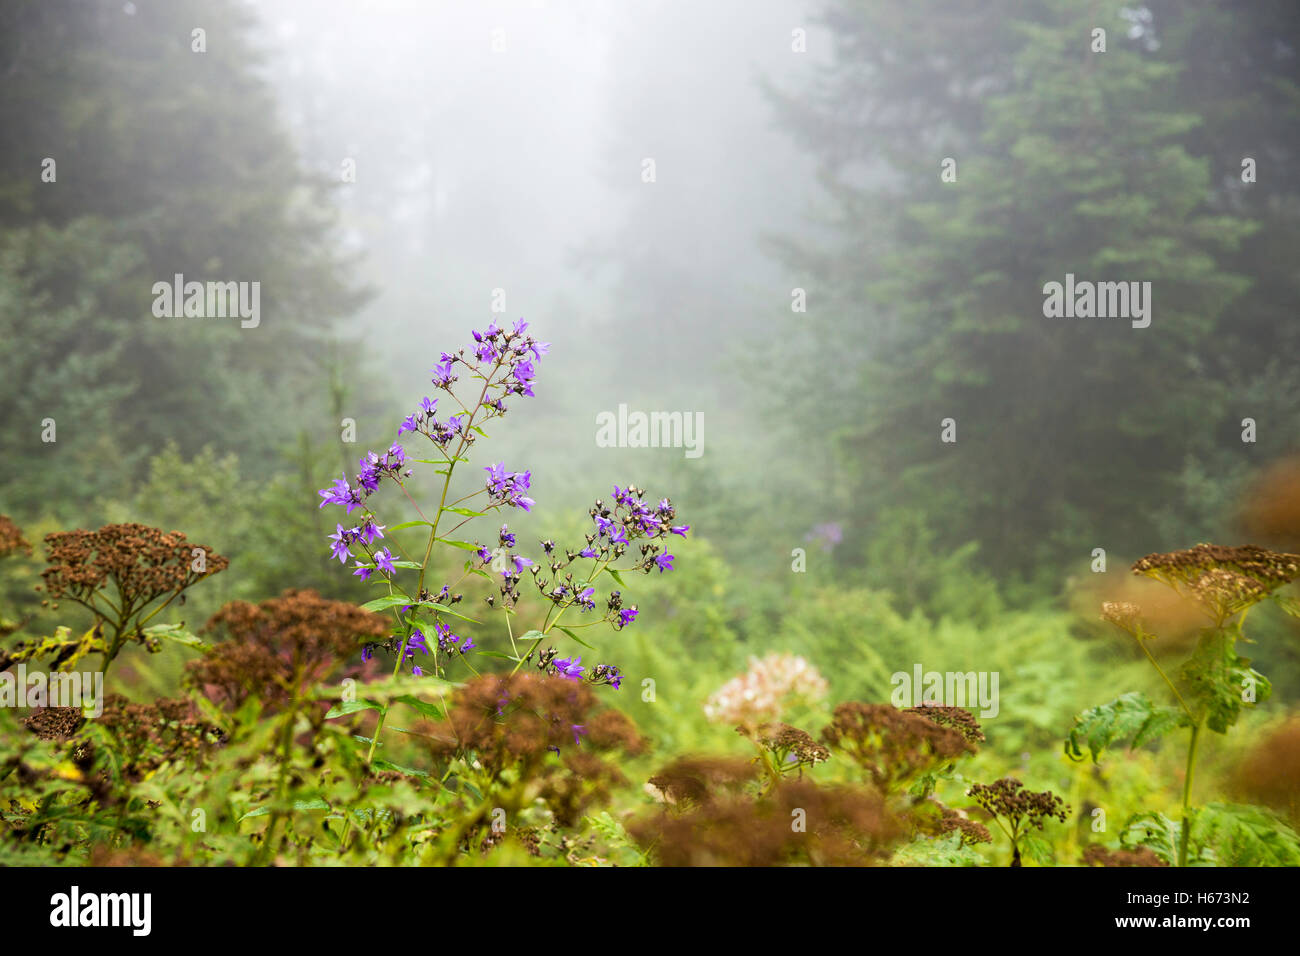 Mountain flowers in foggy forest near Camlihemsin, Rize, Turkey Stock Photo